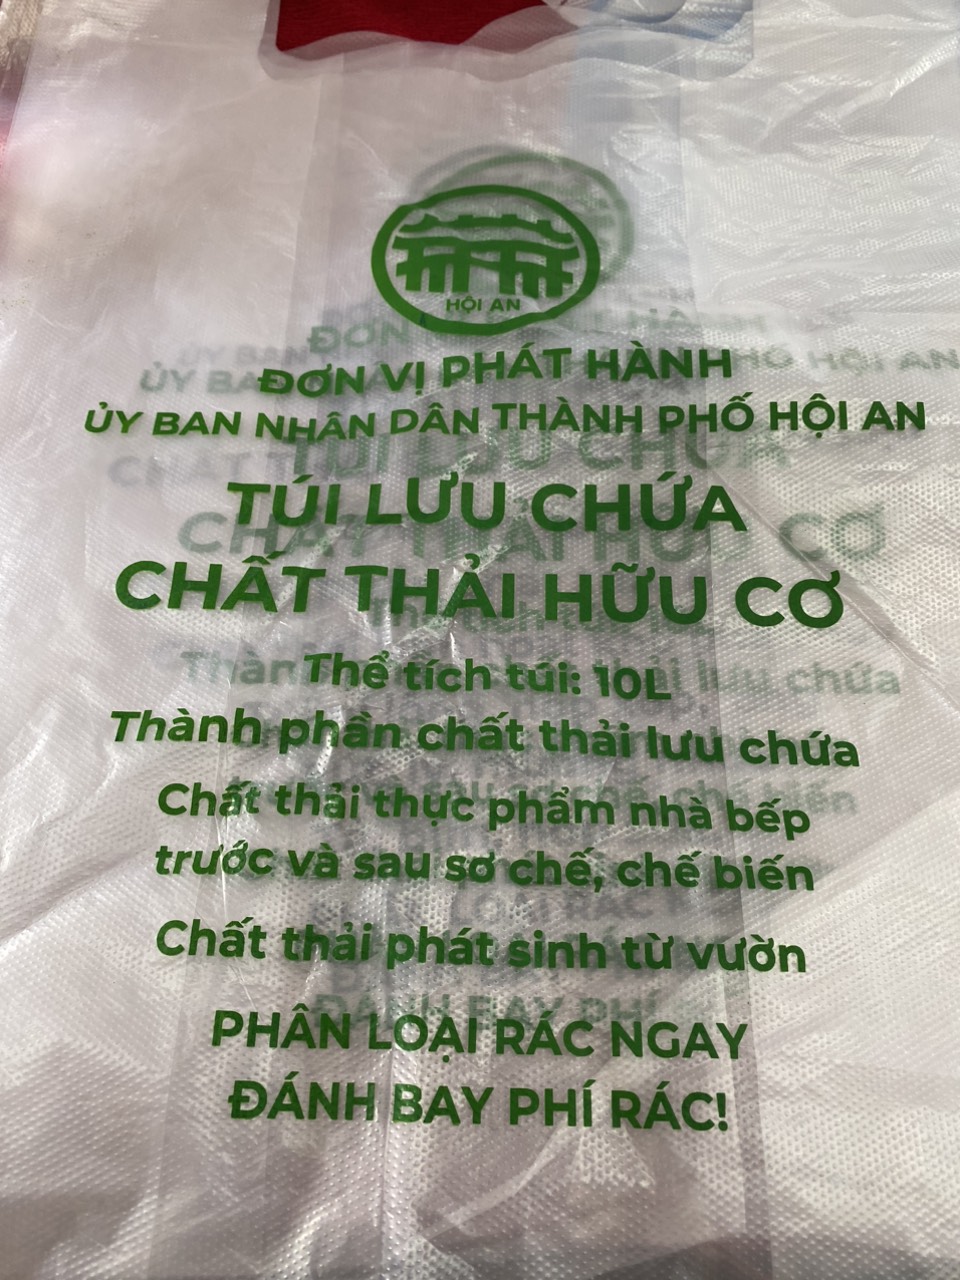 the sample of authorised trash bag